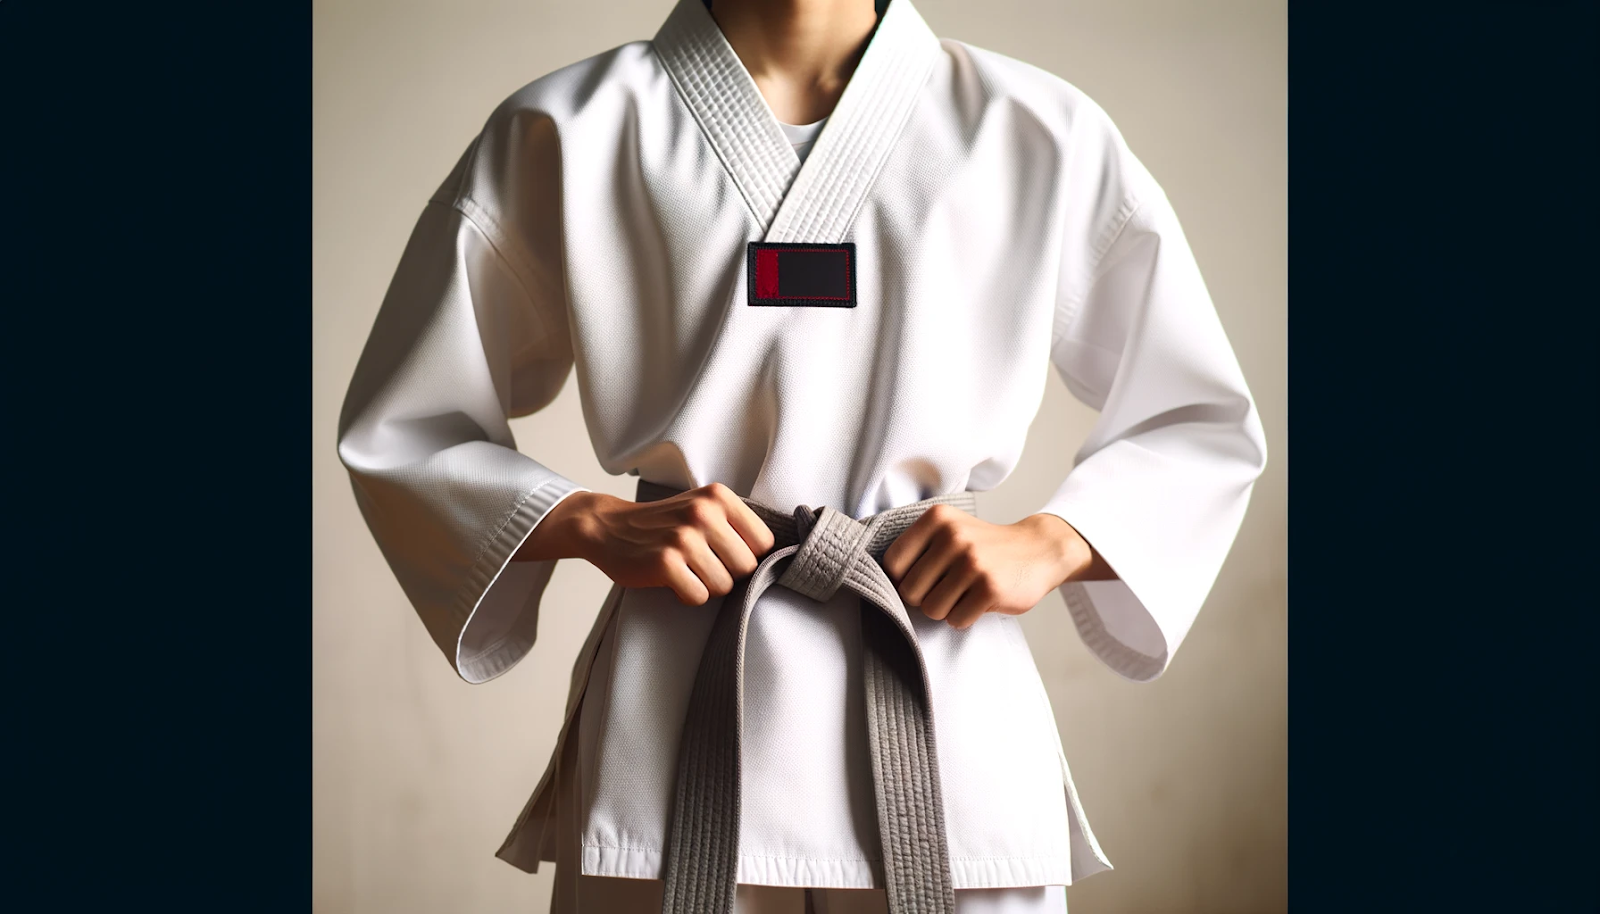 A taekwondo student wrapping the belt around their body.